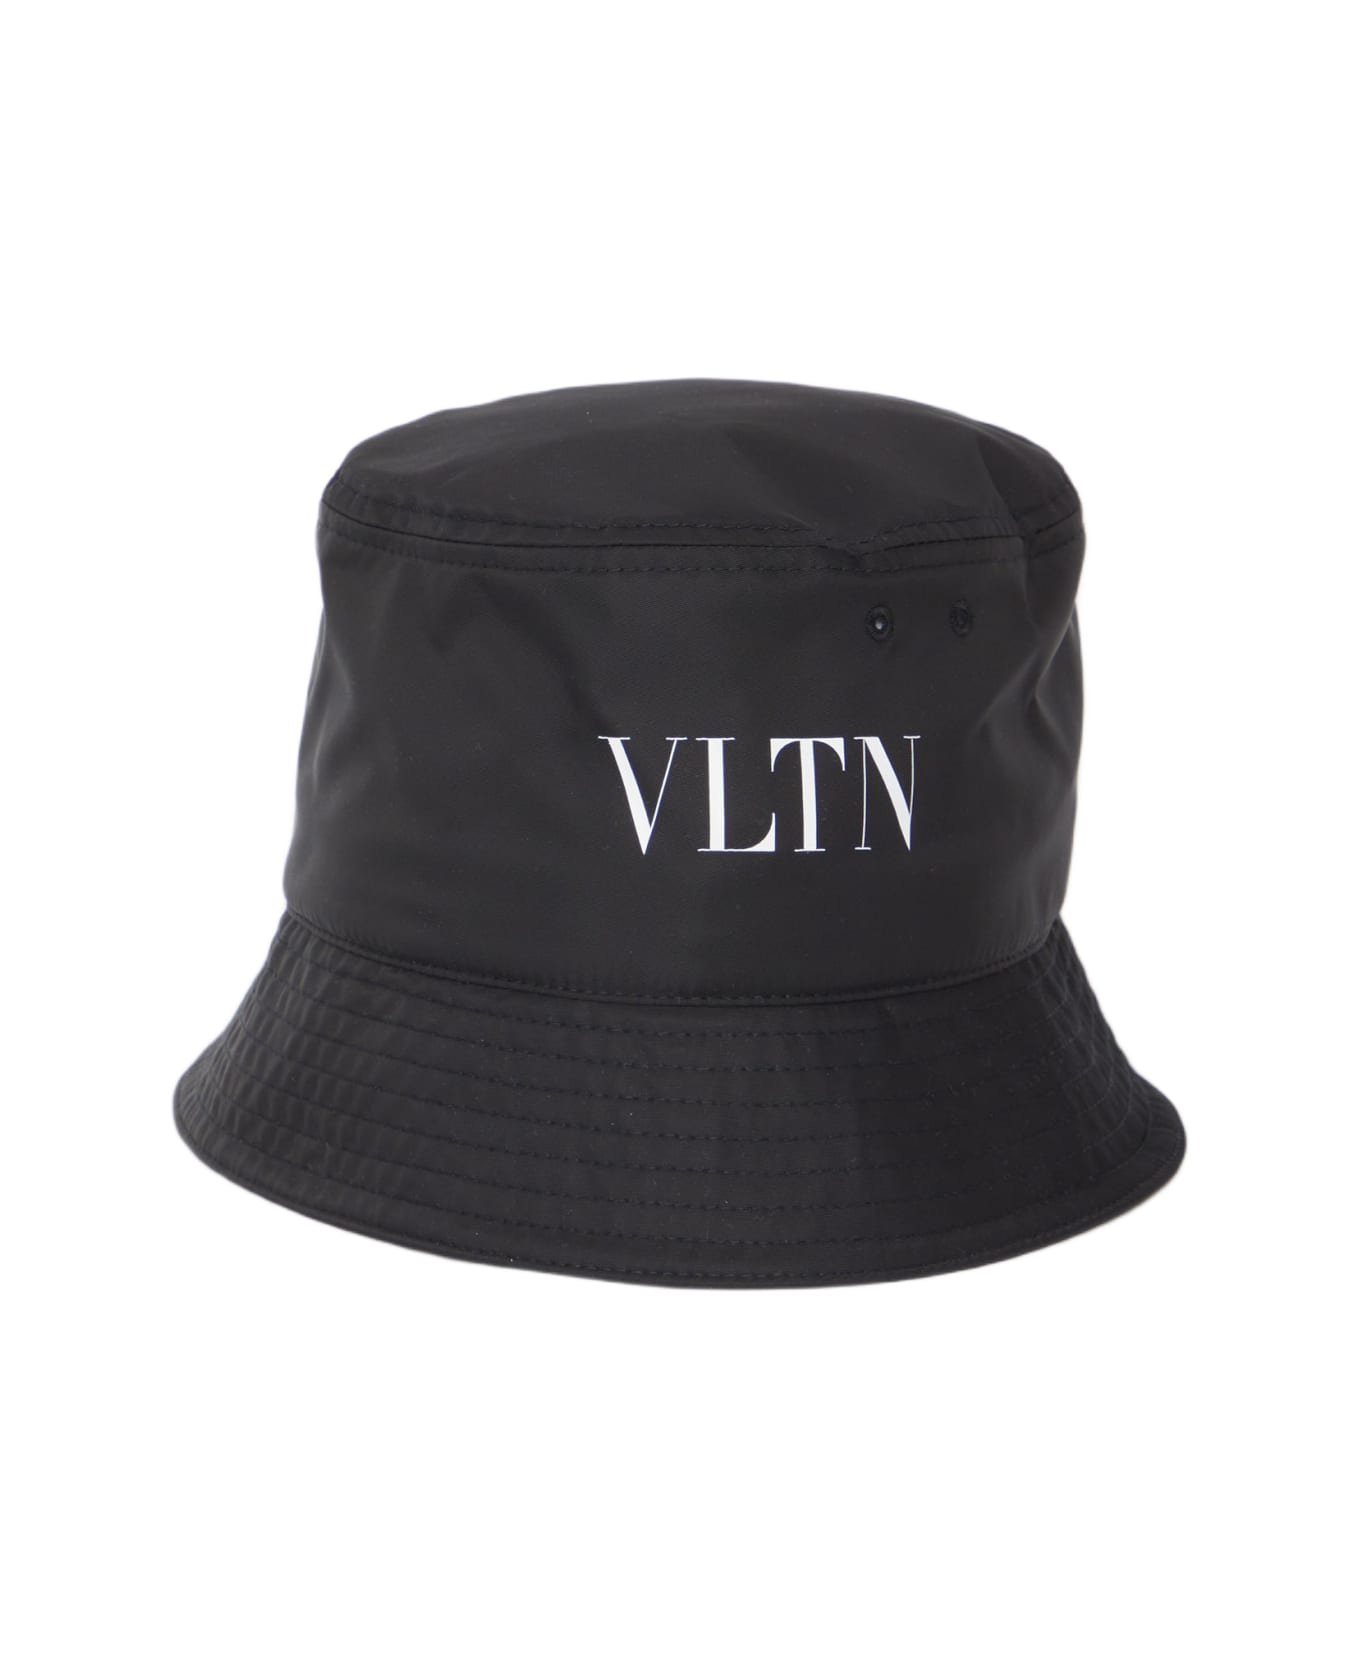 Valentino Garavani Vltn Bucket Hat - BLACK